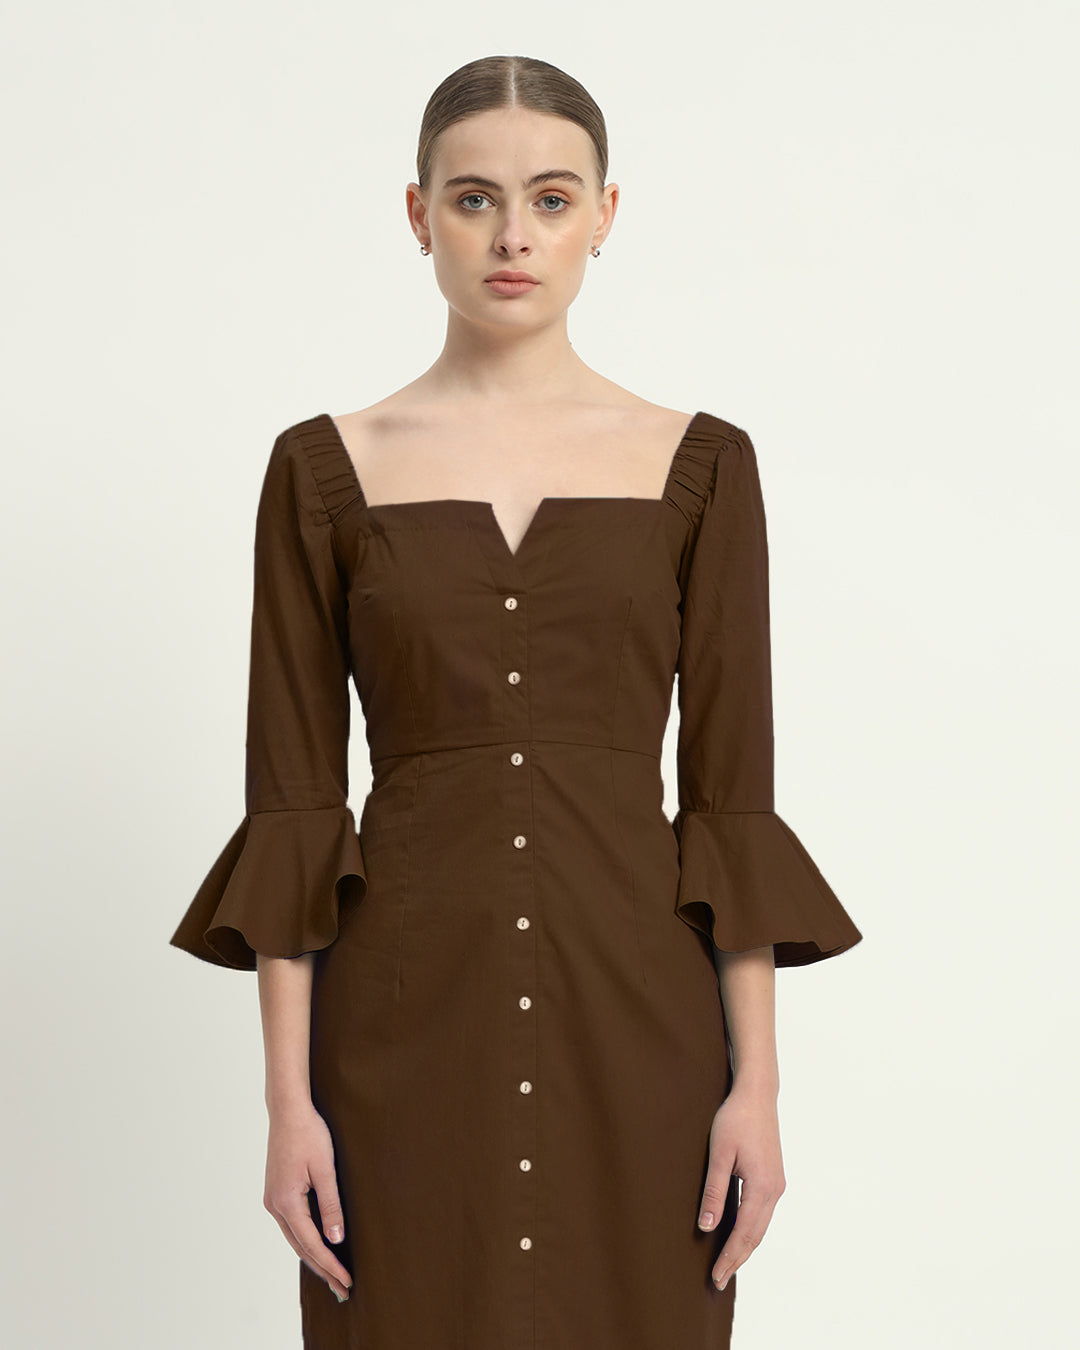 The Nutshell Rosendale Cotton Dress